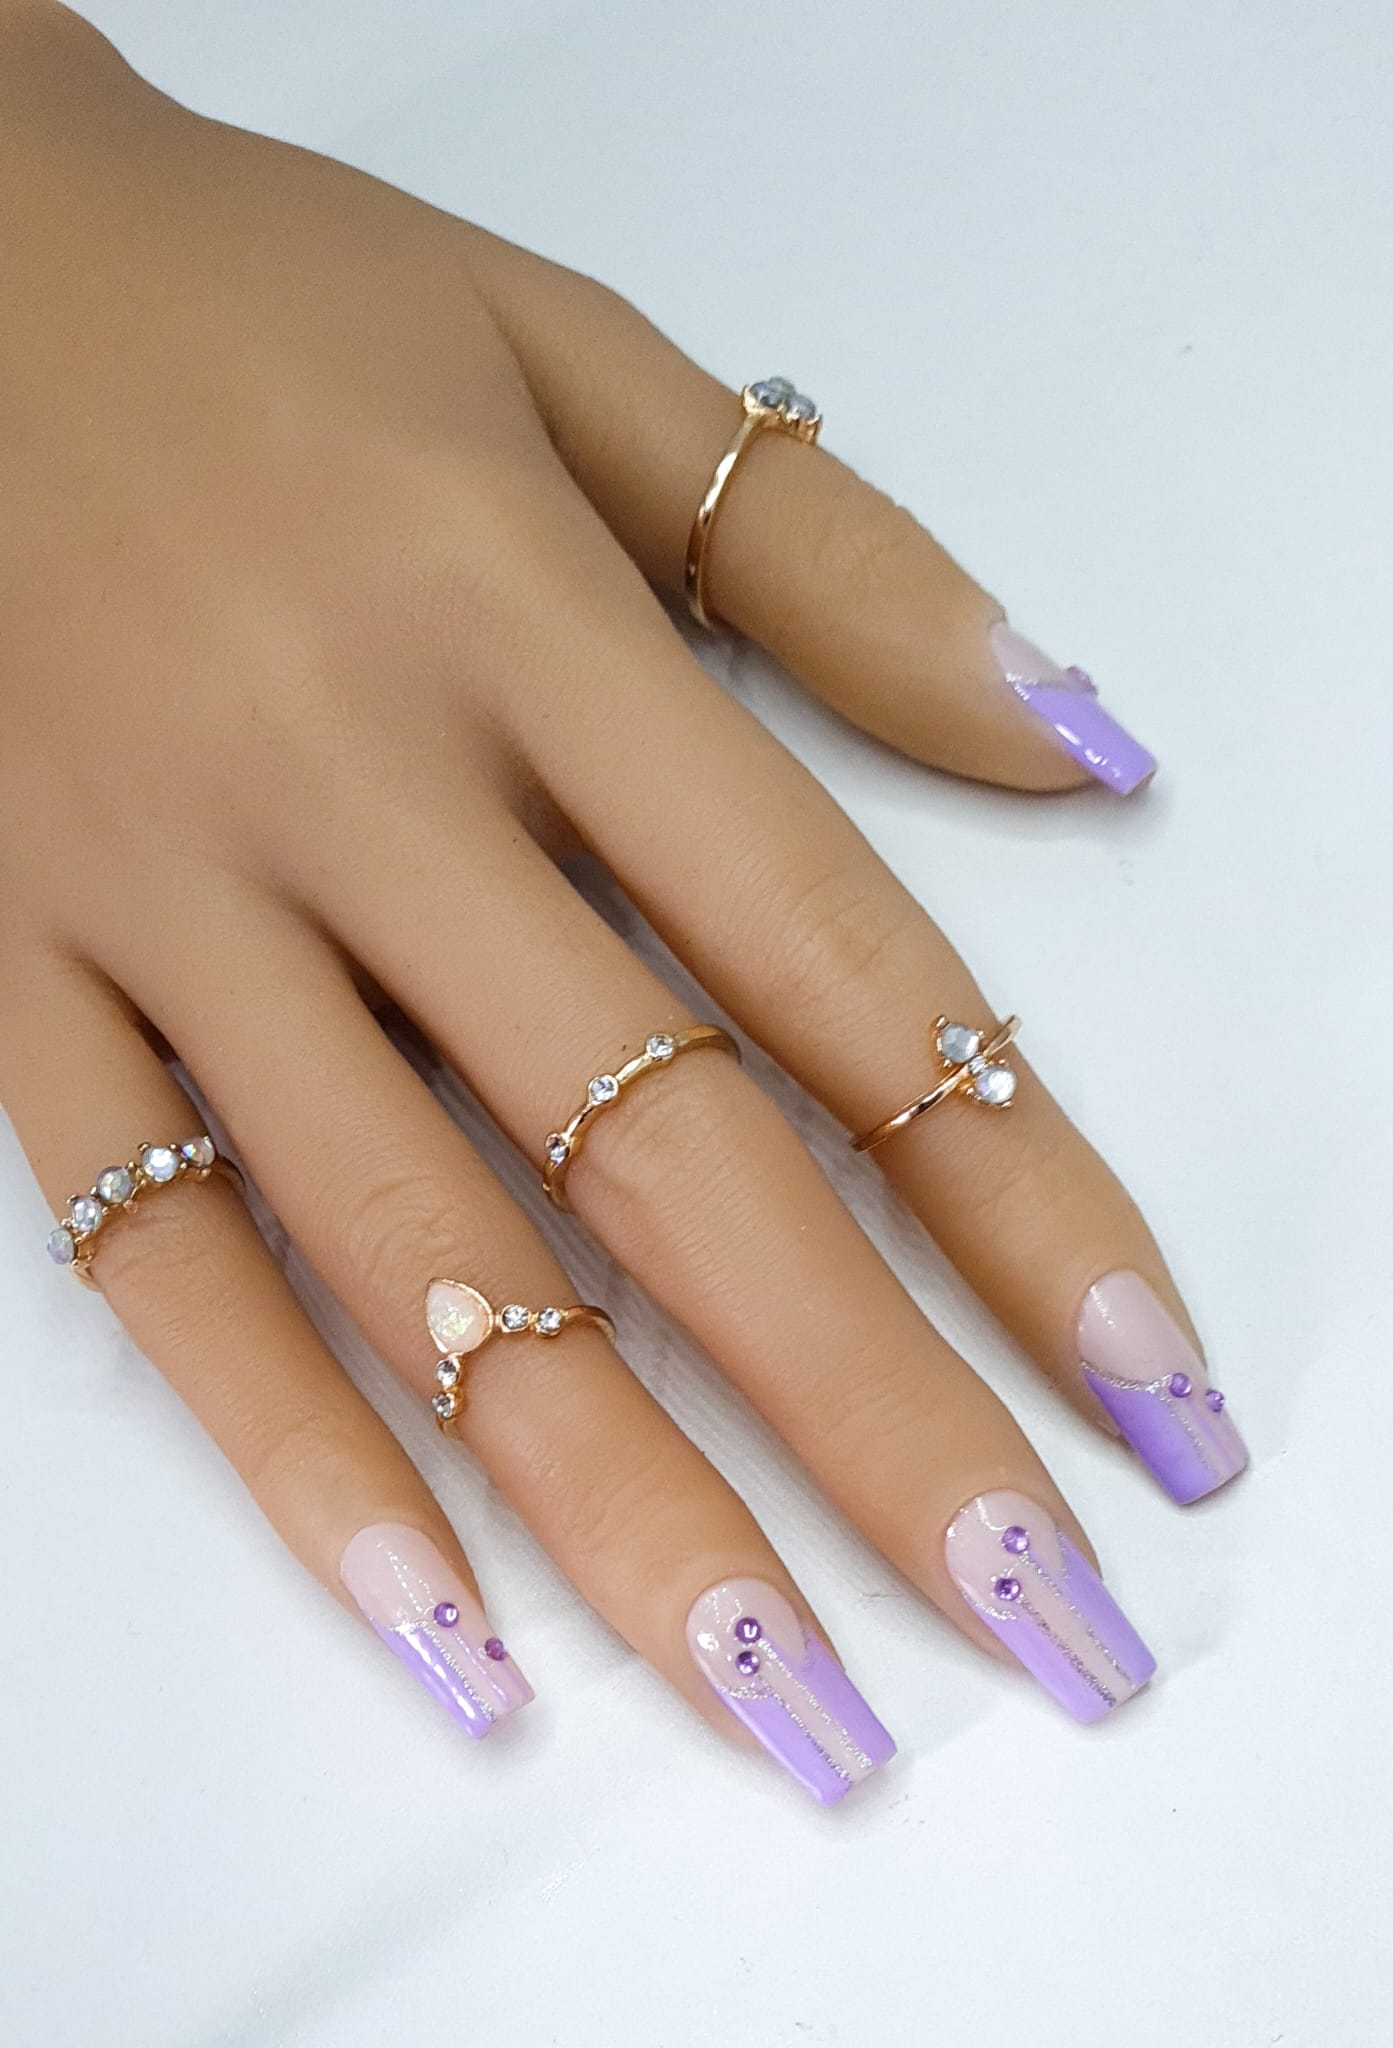 false nails Medium square nails shape in a purple colour with rhinestones bling